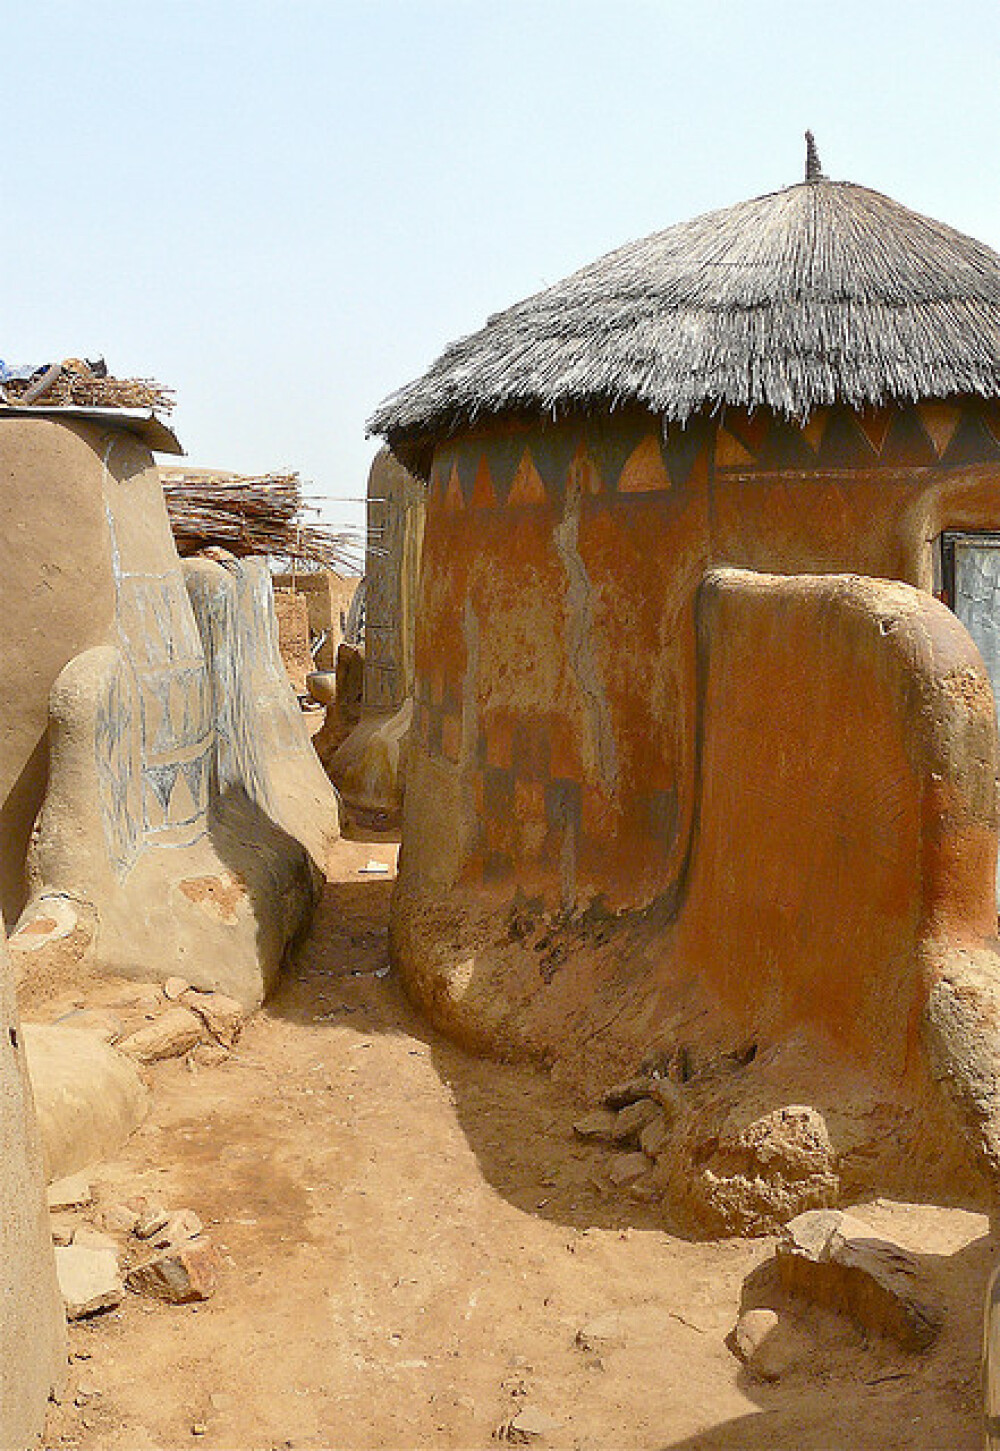 Galerie FOTO. Frumusetea unica a unui sat sarac, uitat de lume in savana africana - Imaginea 4